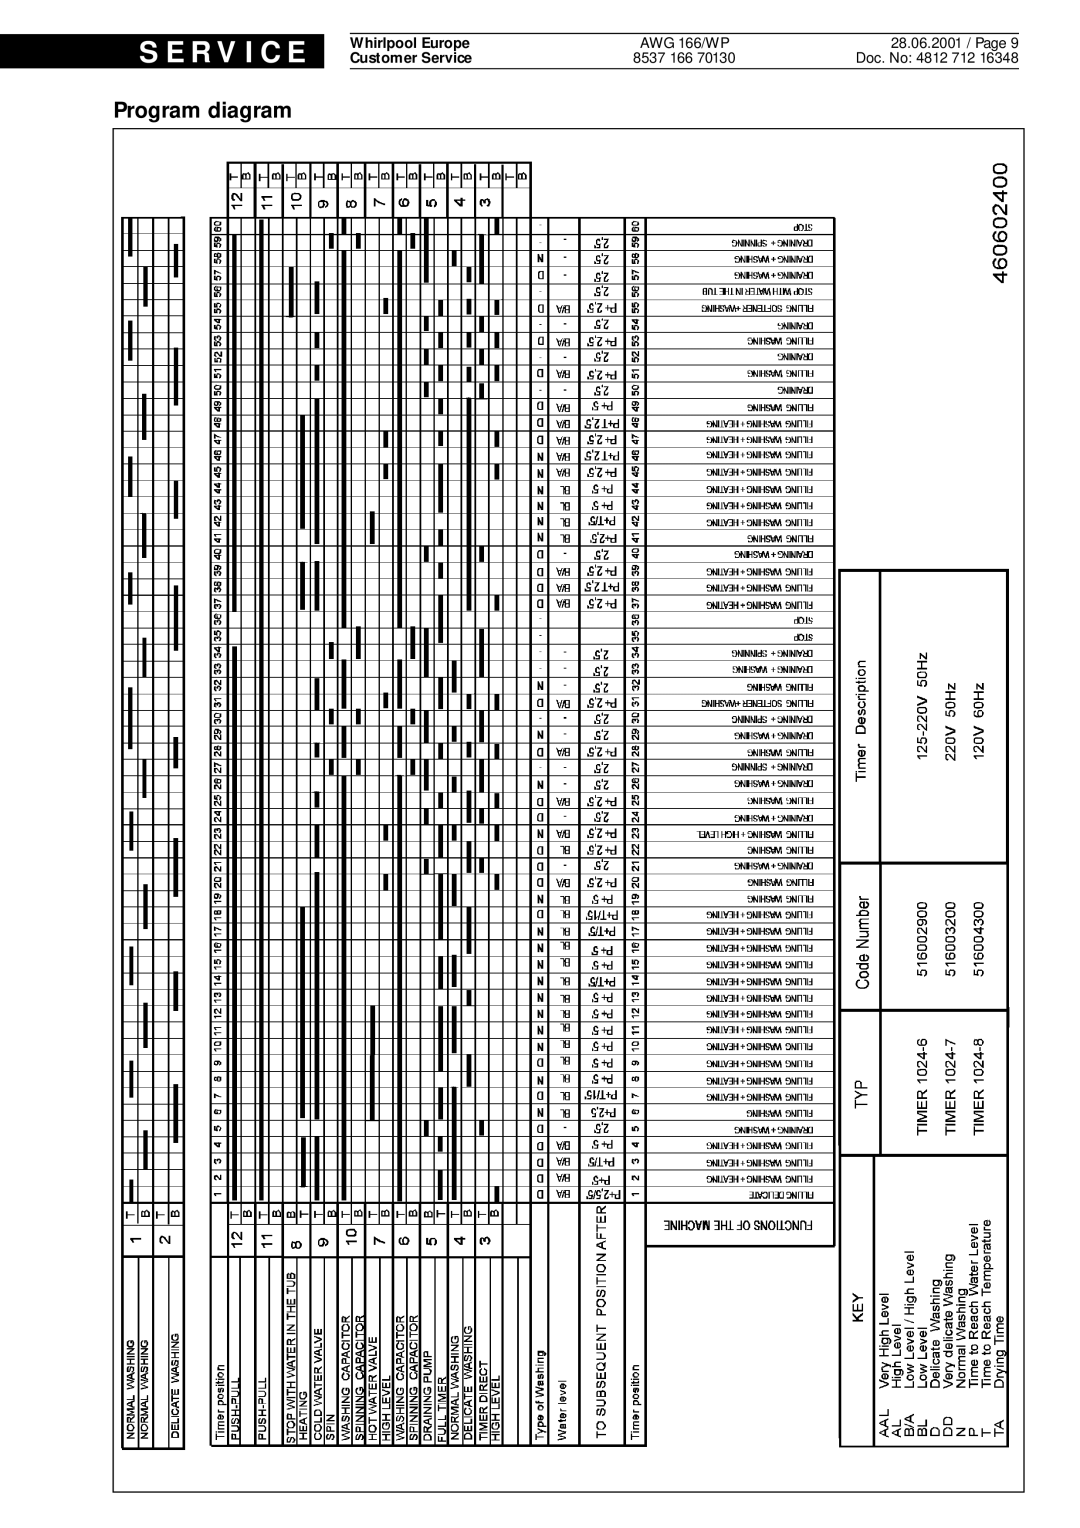 Whirlpool AWG 166 wp service manual Program diagram, S E R V I C E, AWG 166/WP 